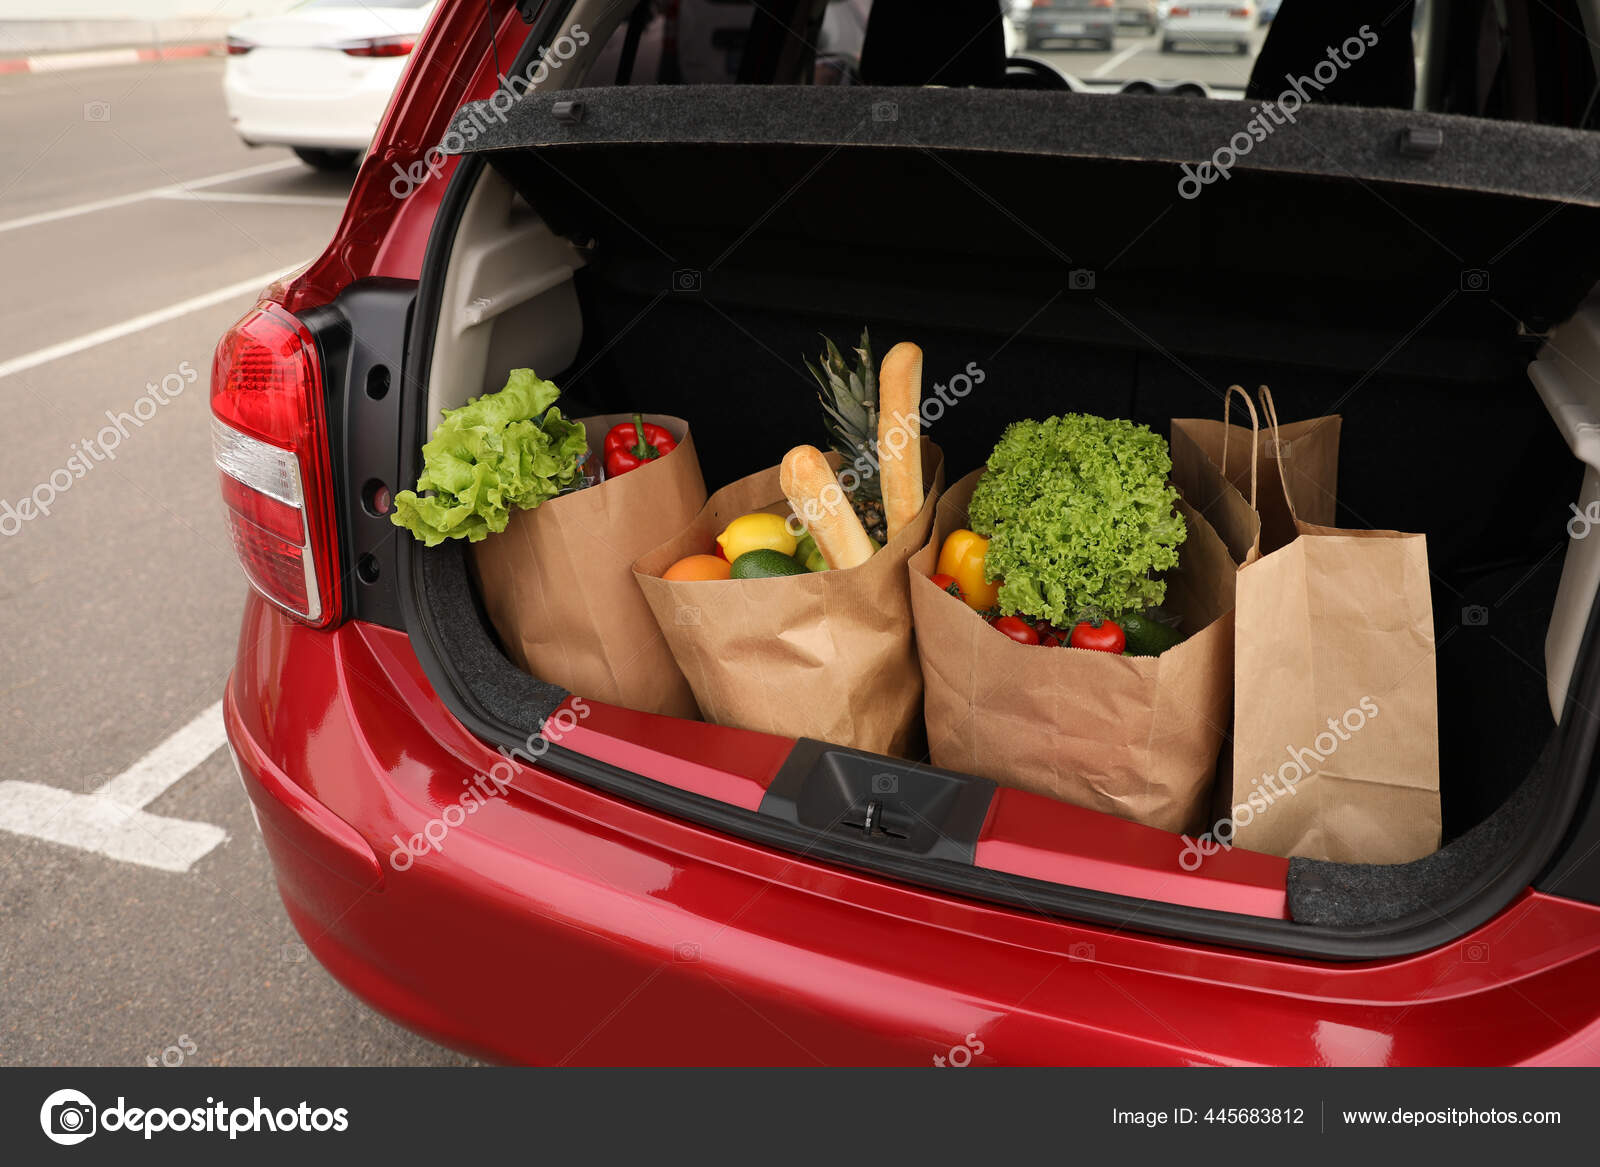 https://st2.depositphotos.com/16122460/44568/i/1600/depositphotos_445683812-stock-photo-bags-full-groceries-car-trunk.jpg